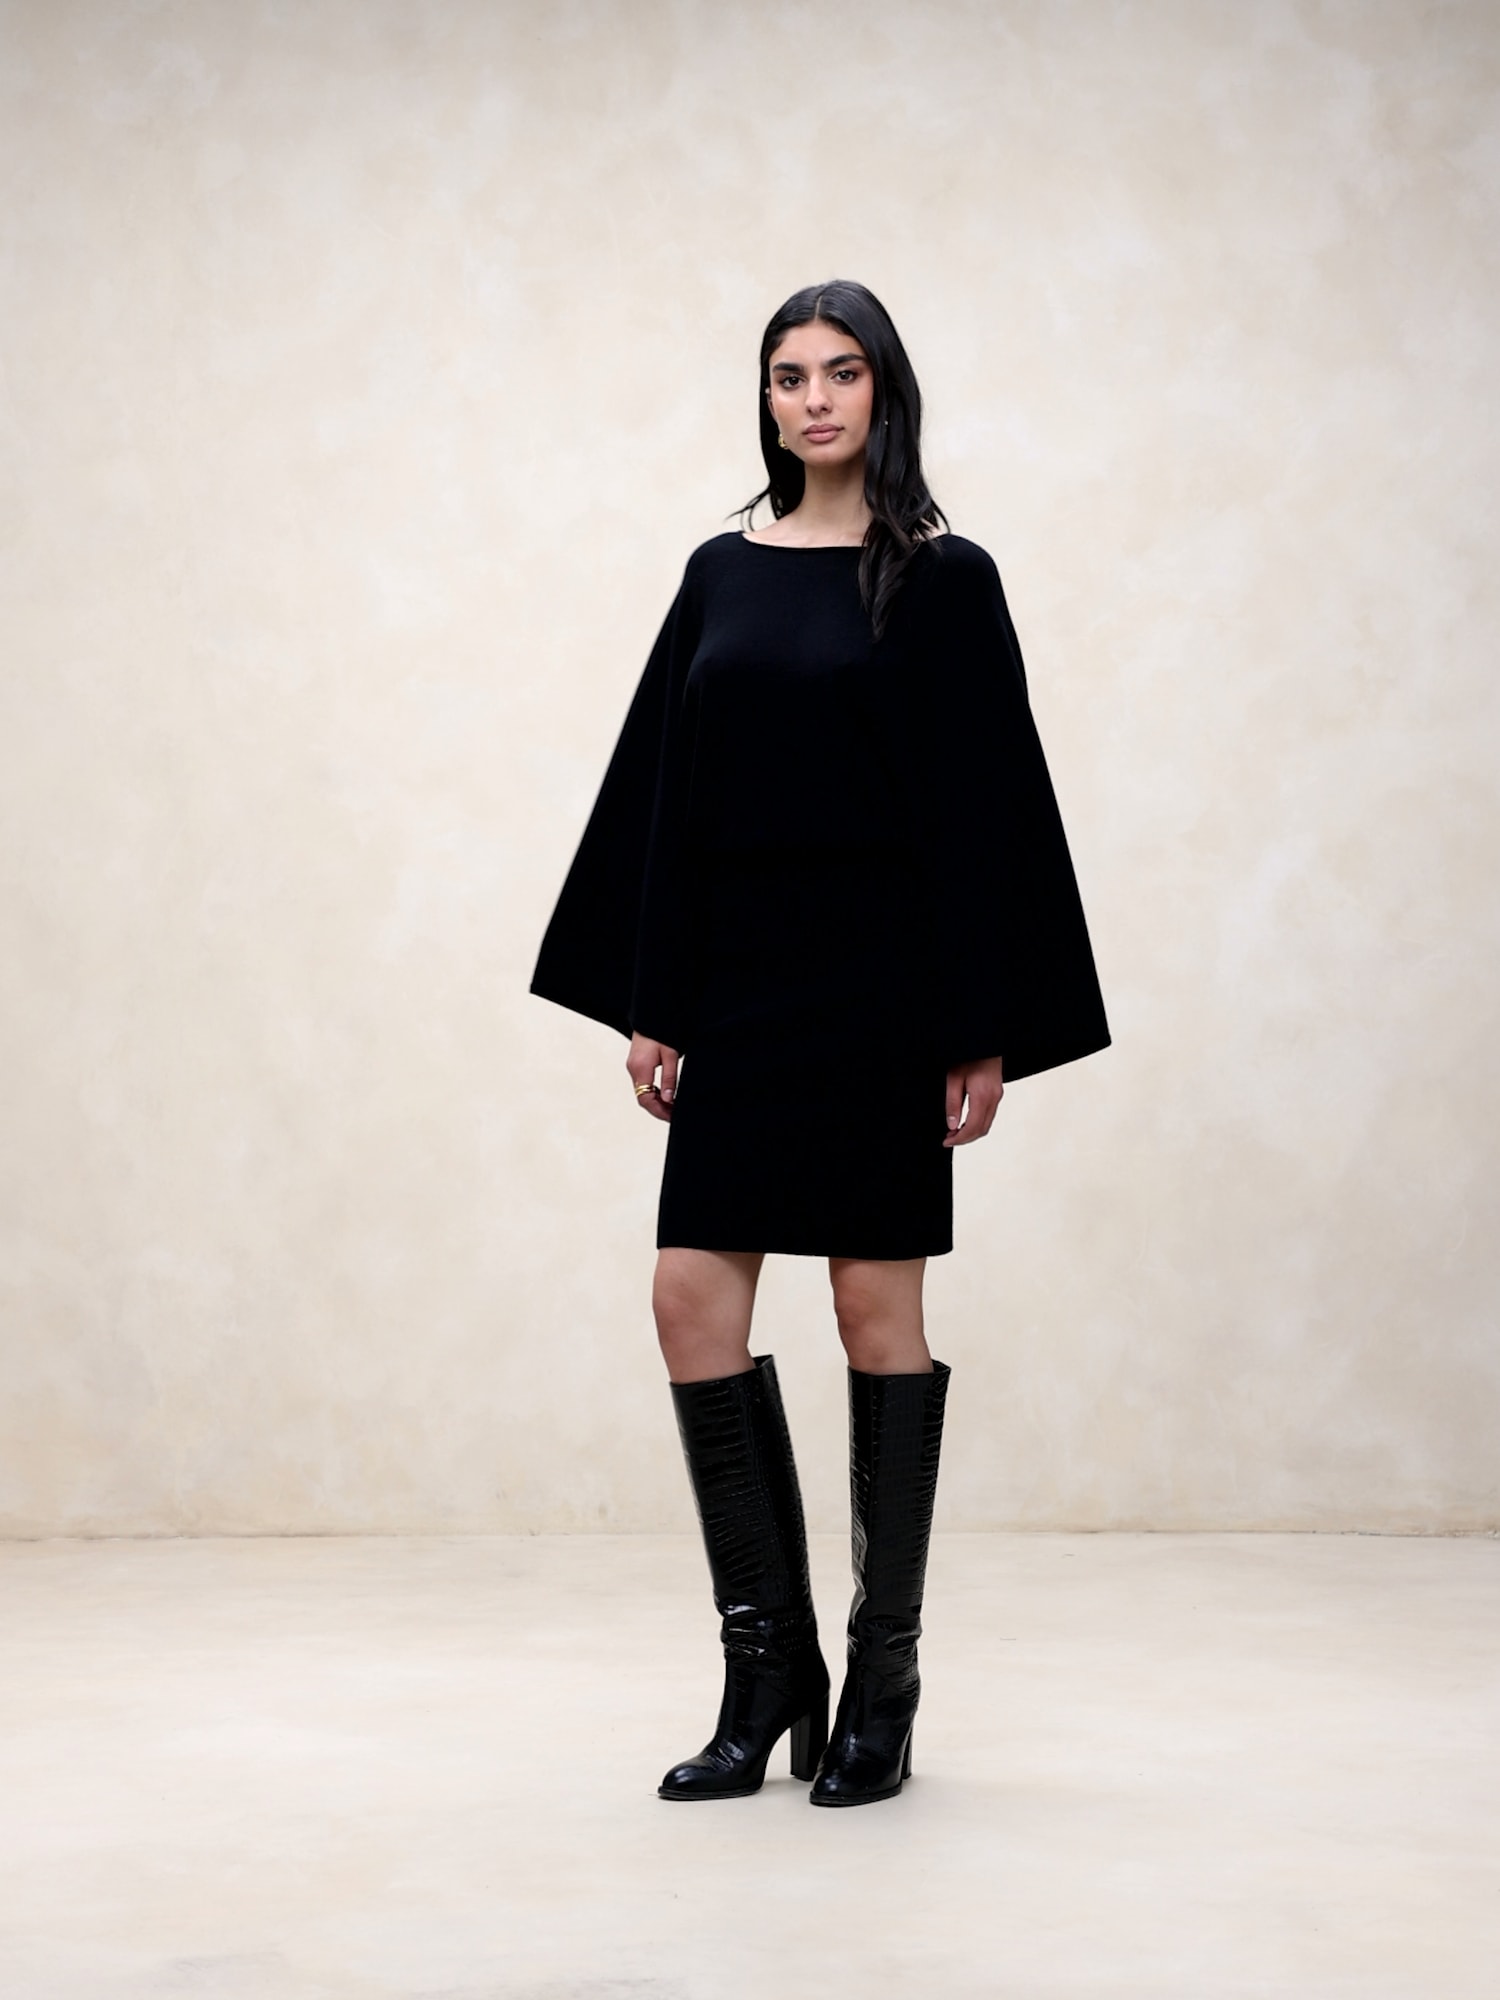 Ripe Maternity Valerie Knit Tunic Sweater Dress Black/Ecru